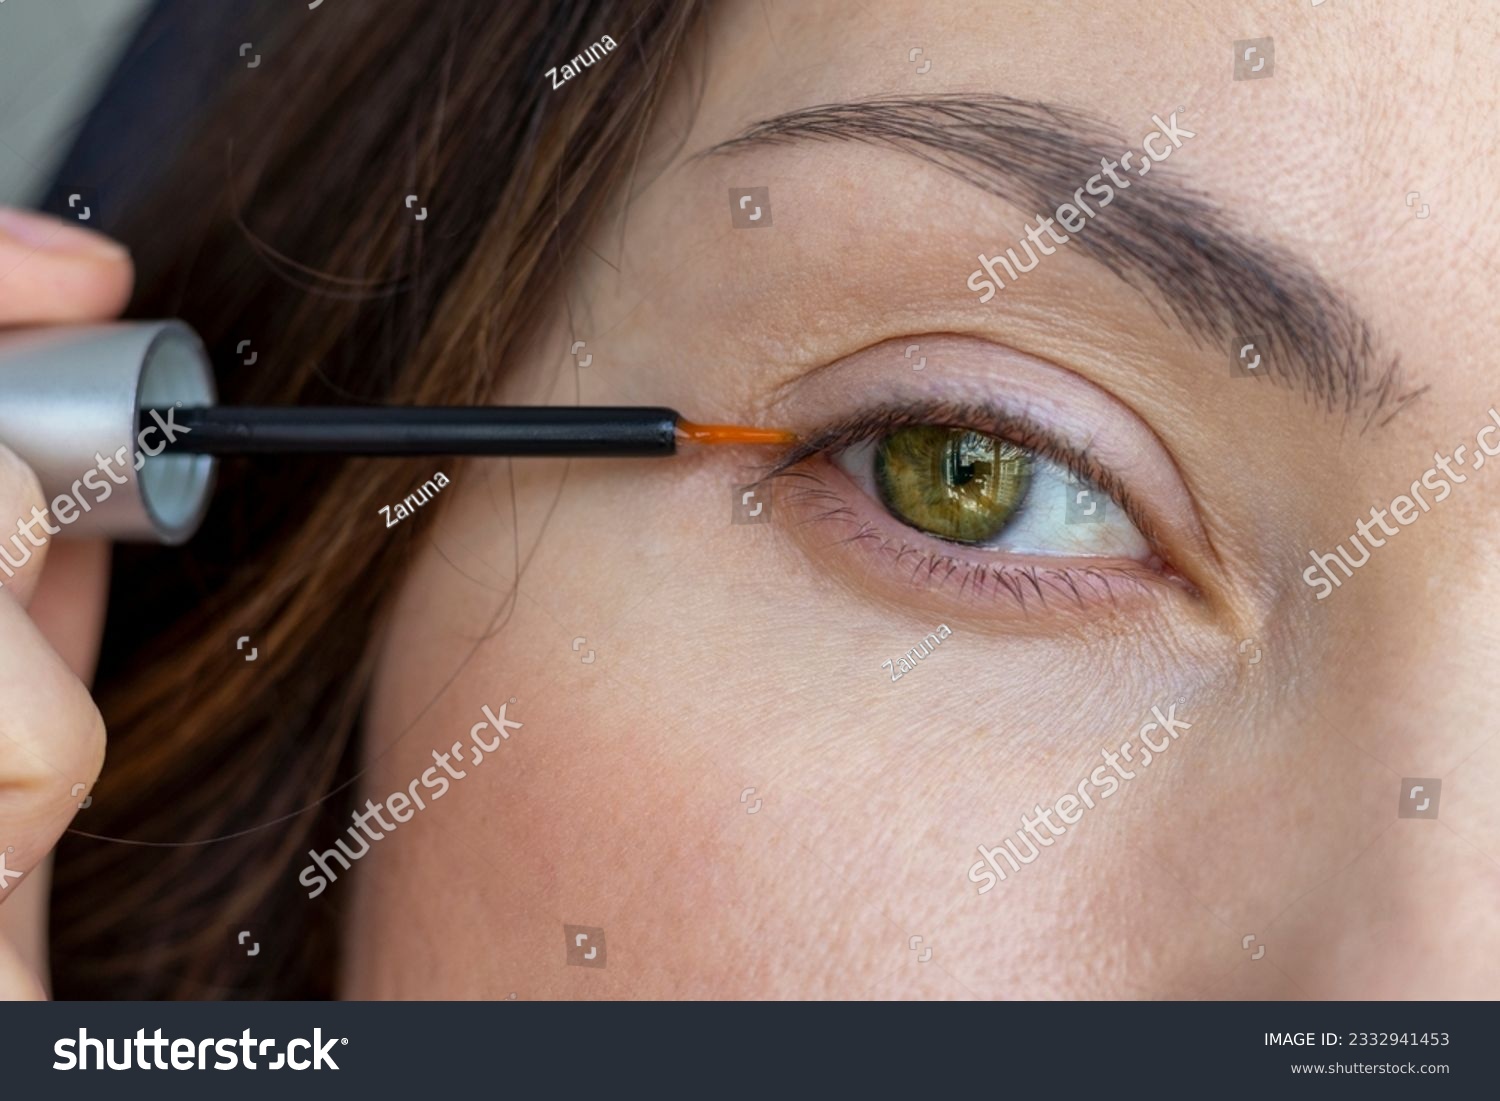 A woman applies eyelash growth product, close up #2332941453